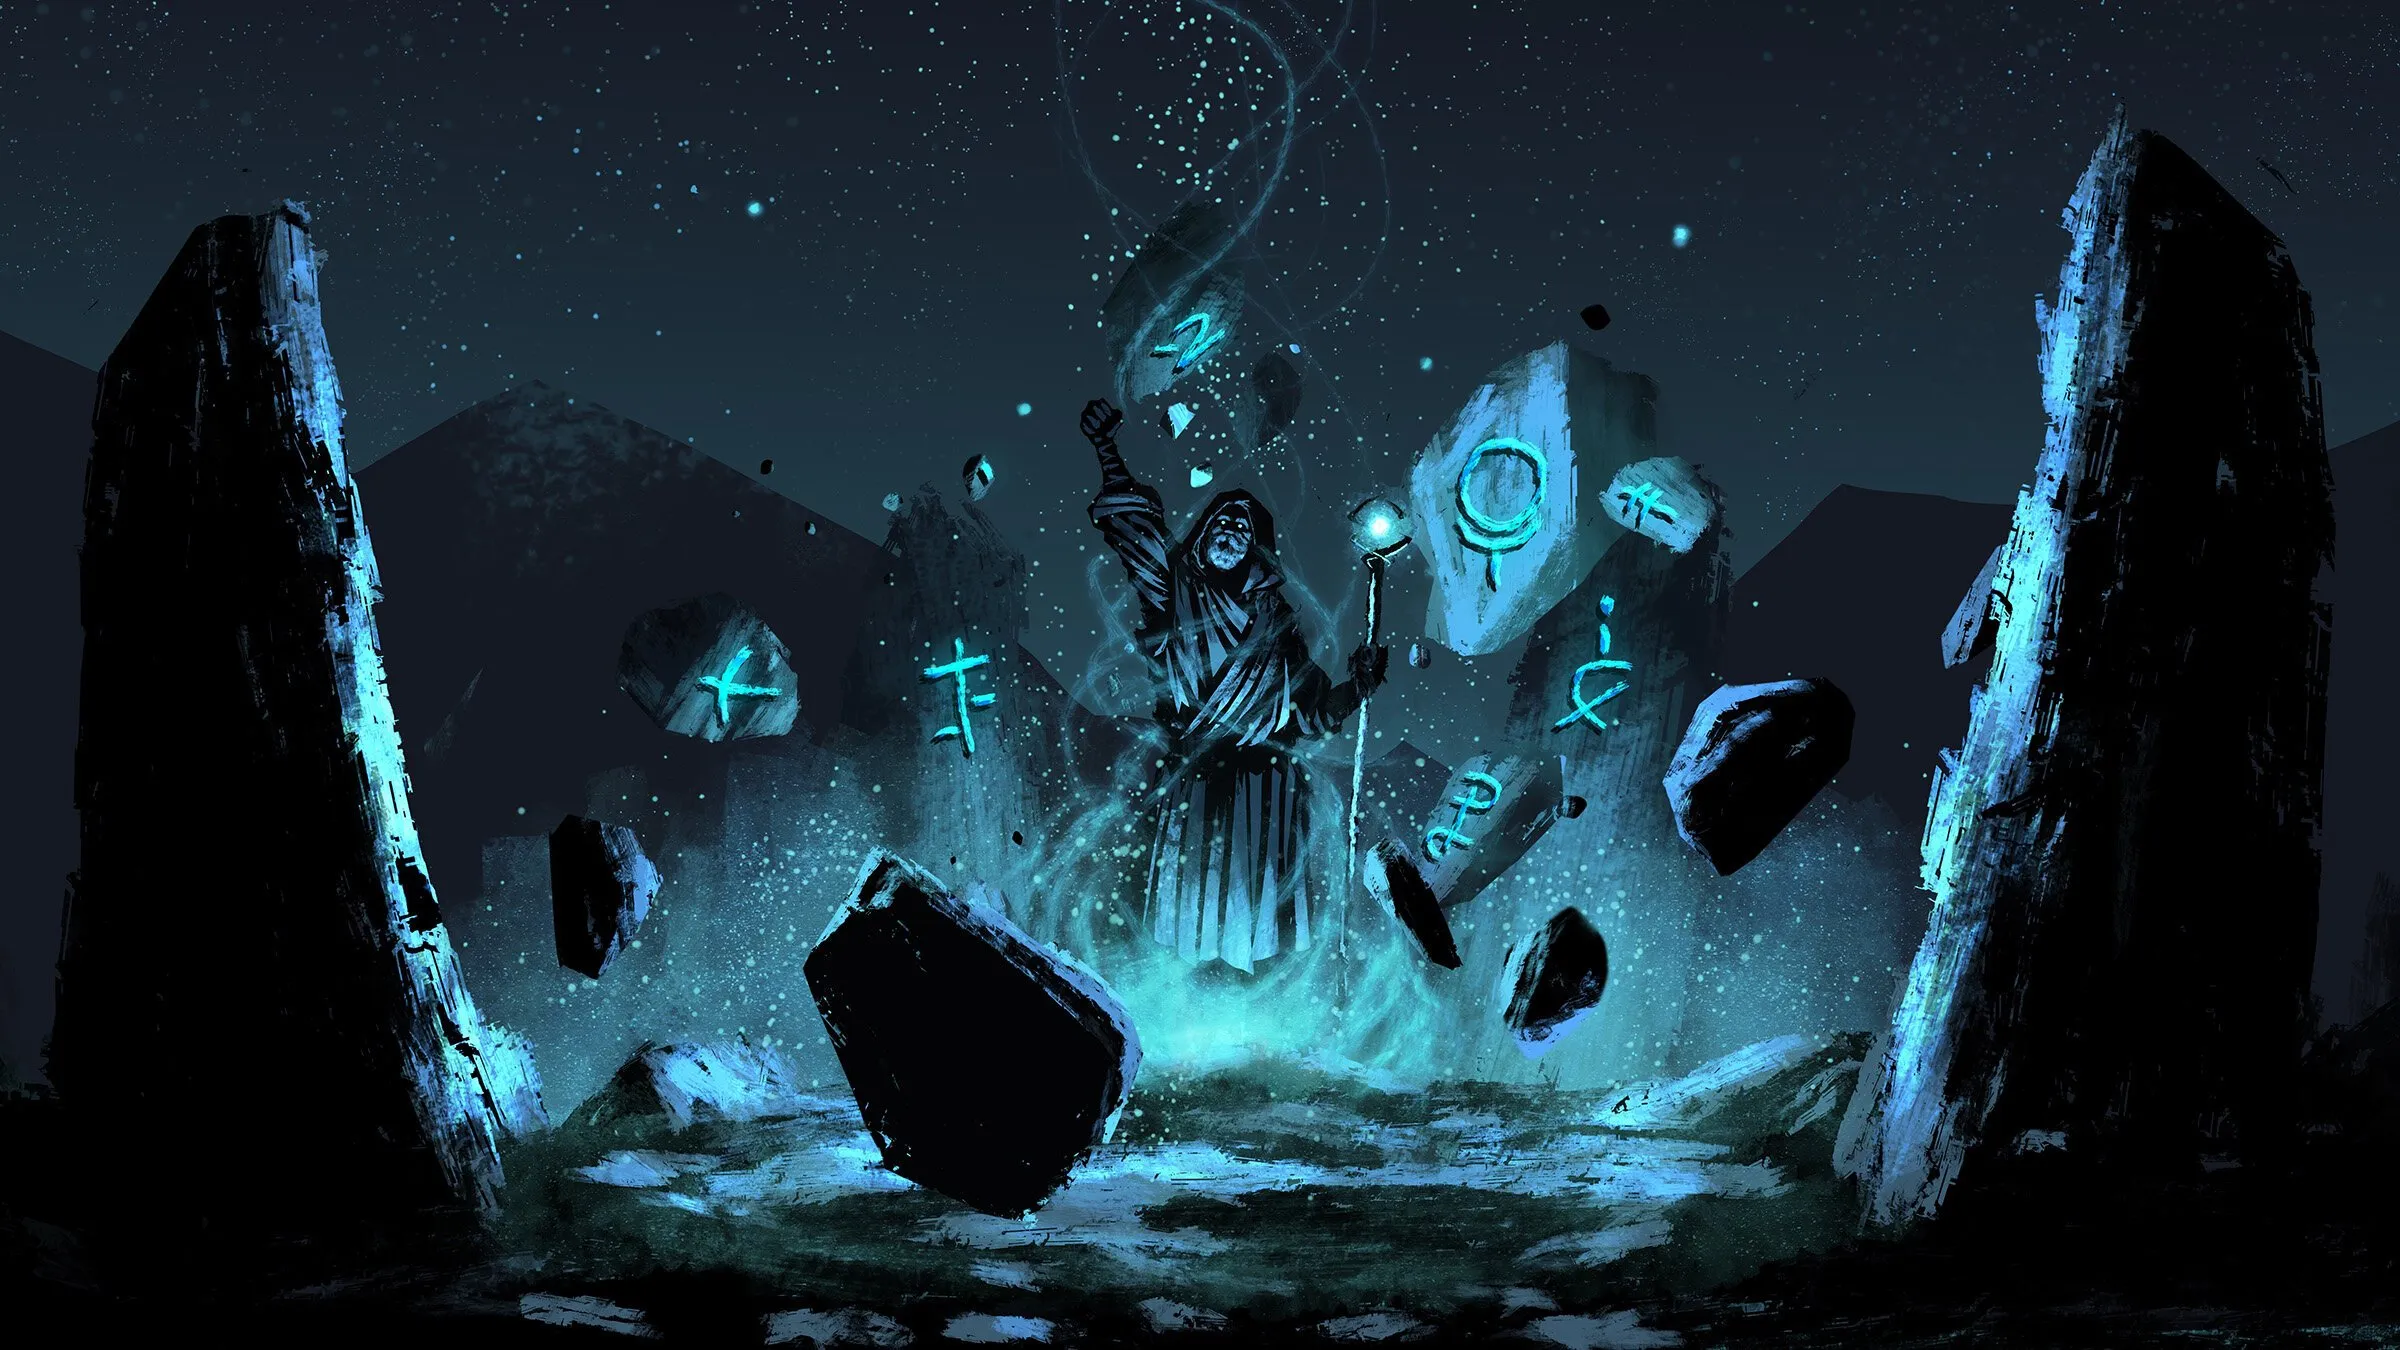 A wizard lifting runestones. Illustration by Iobard/Shutterstock.